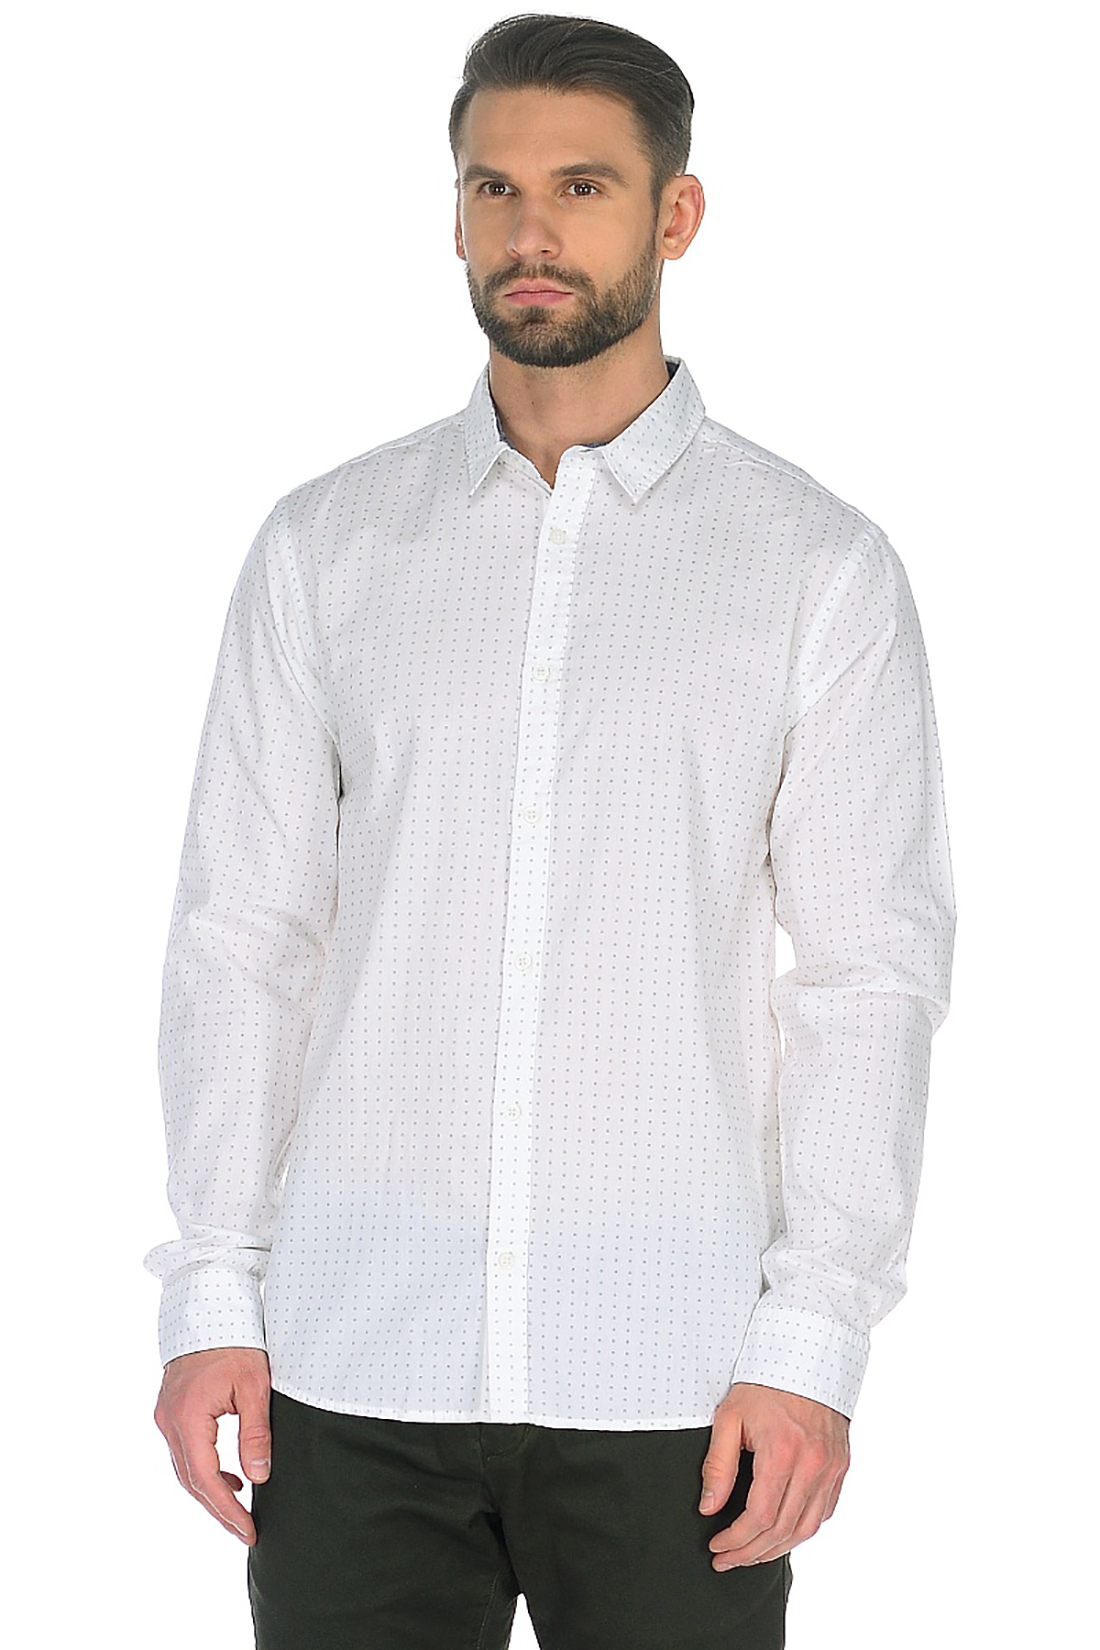 Рубашка с геометрическим узором (арт. baon B668015), размер XL, цвет white printed#белый Рубашка с геометрическим узором (арт. baon B668015) - фото 1